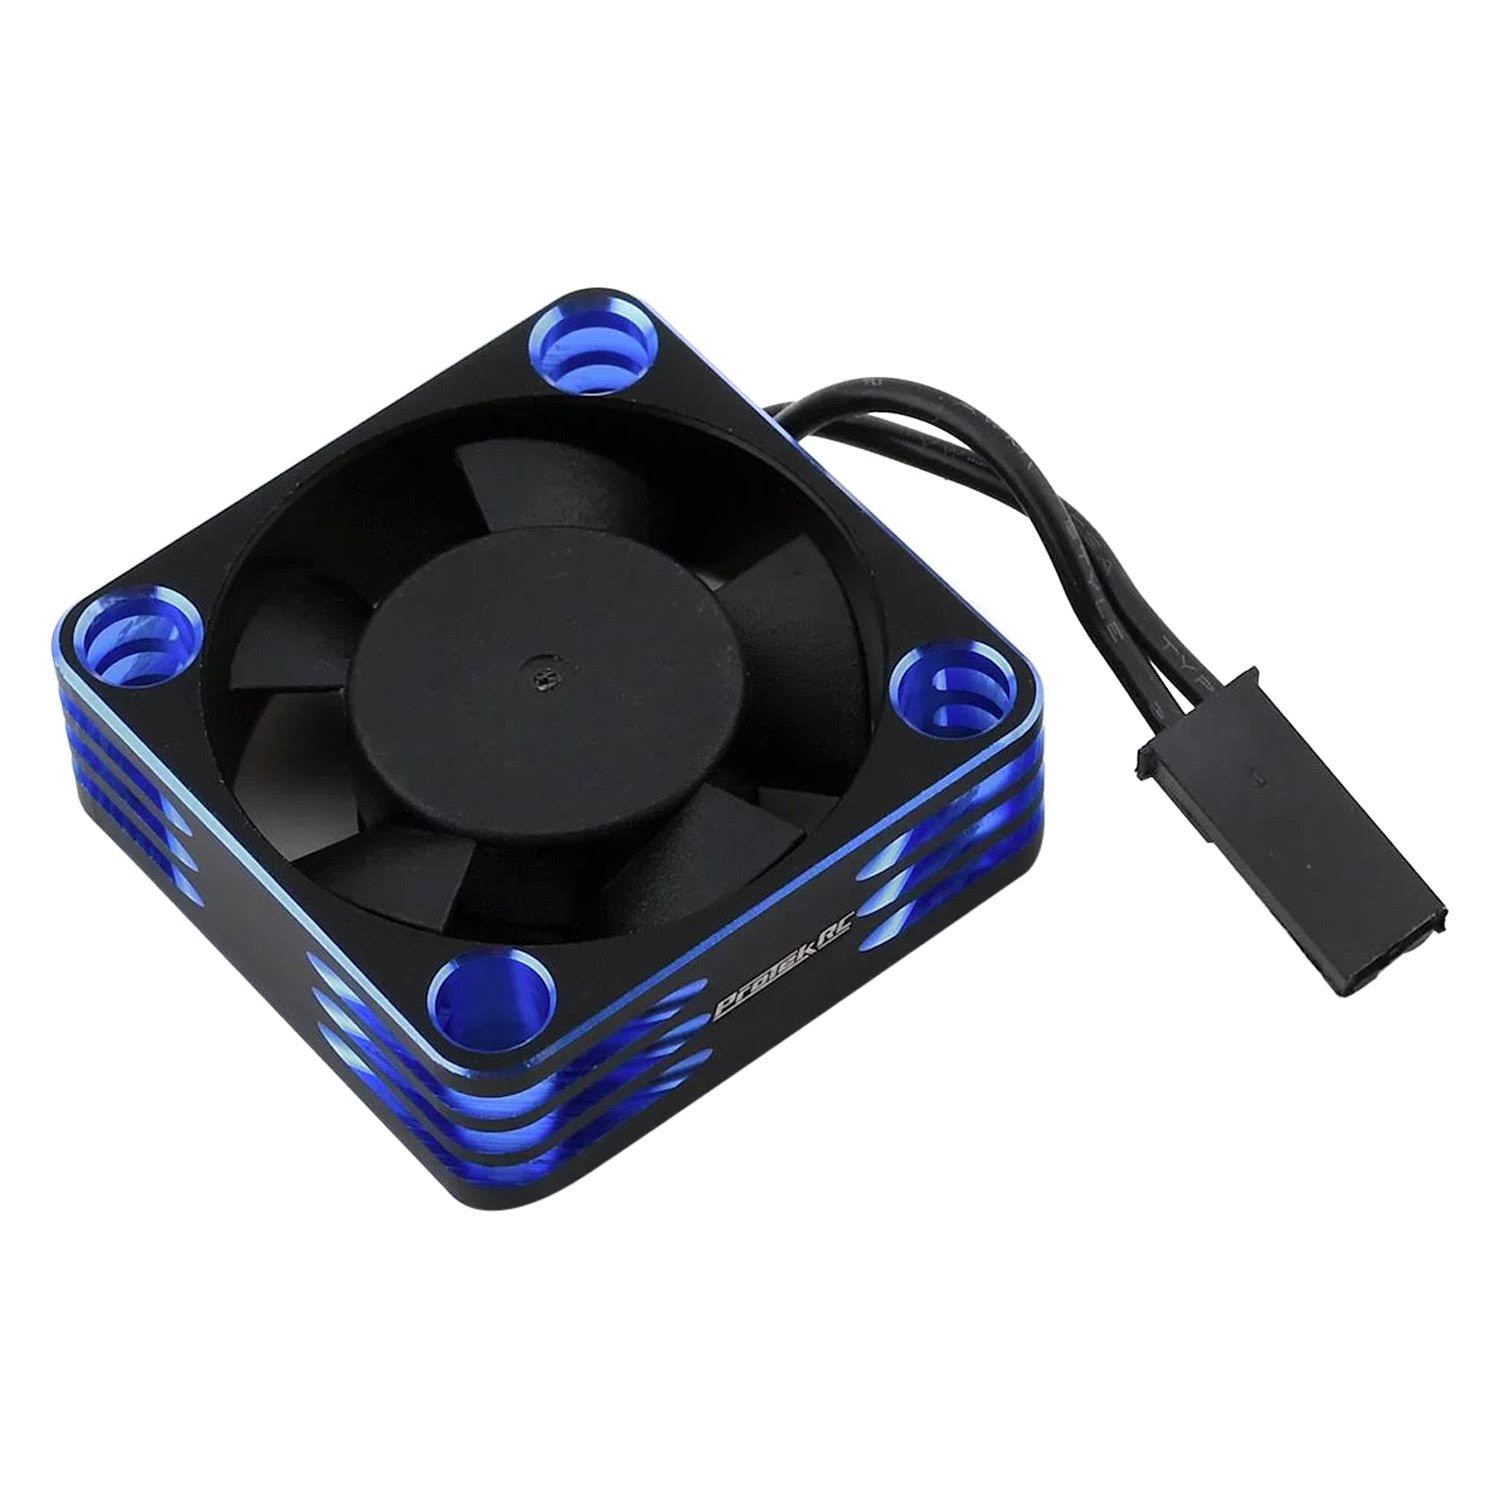 Protek 30x30x10mm Aluminum High Speed HV Cooling Fan (Blue/Black) 2112